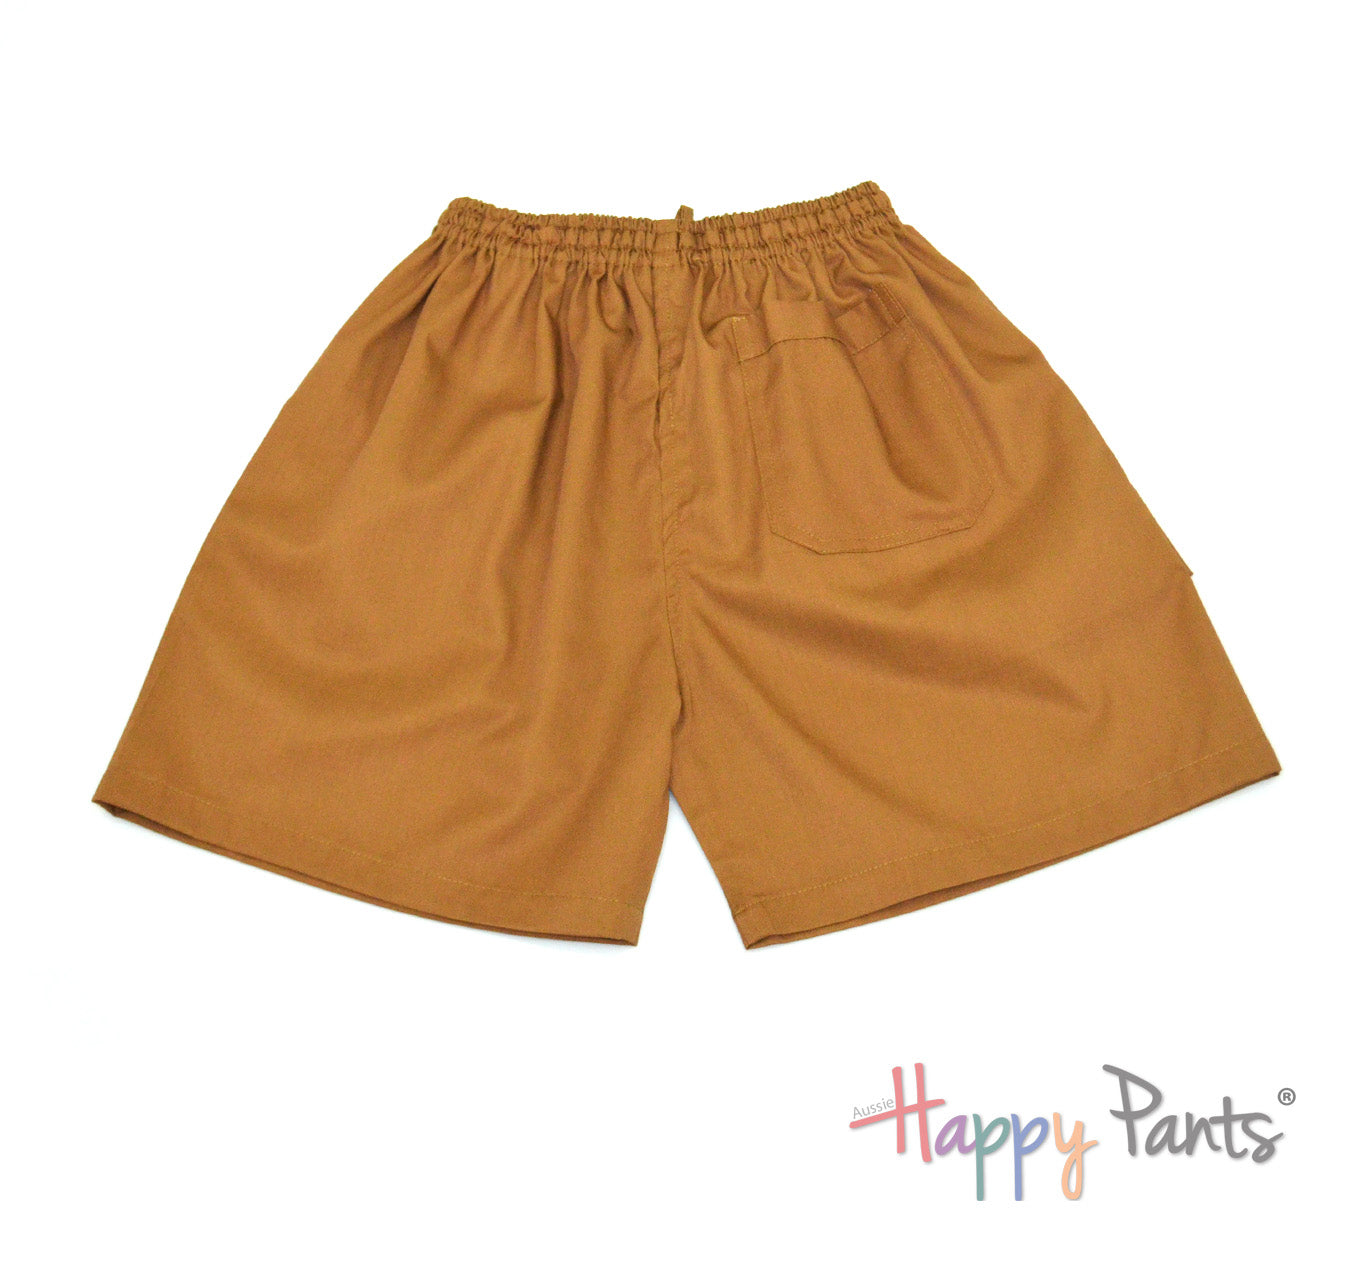 cotton shorts with elastic waist holiday pants resort wear Australia comfy bordies